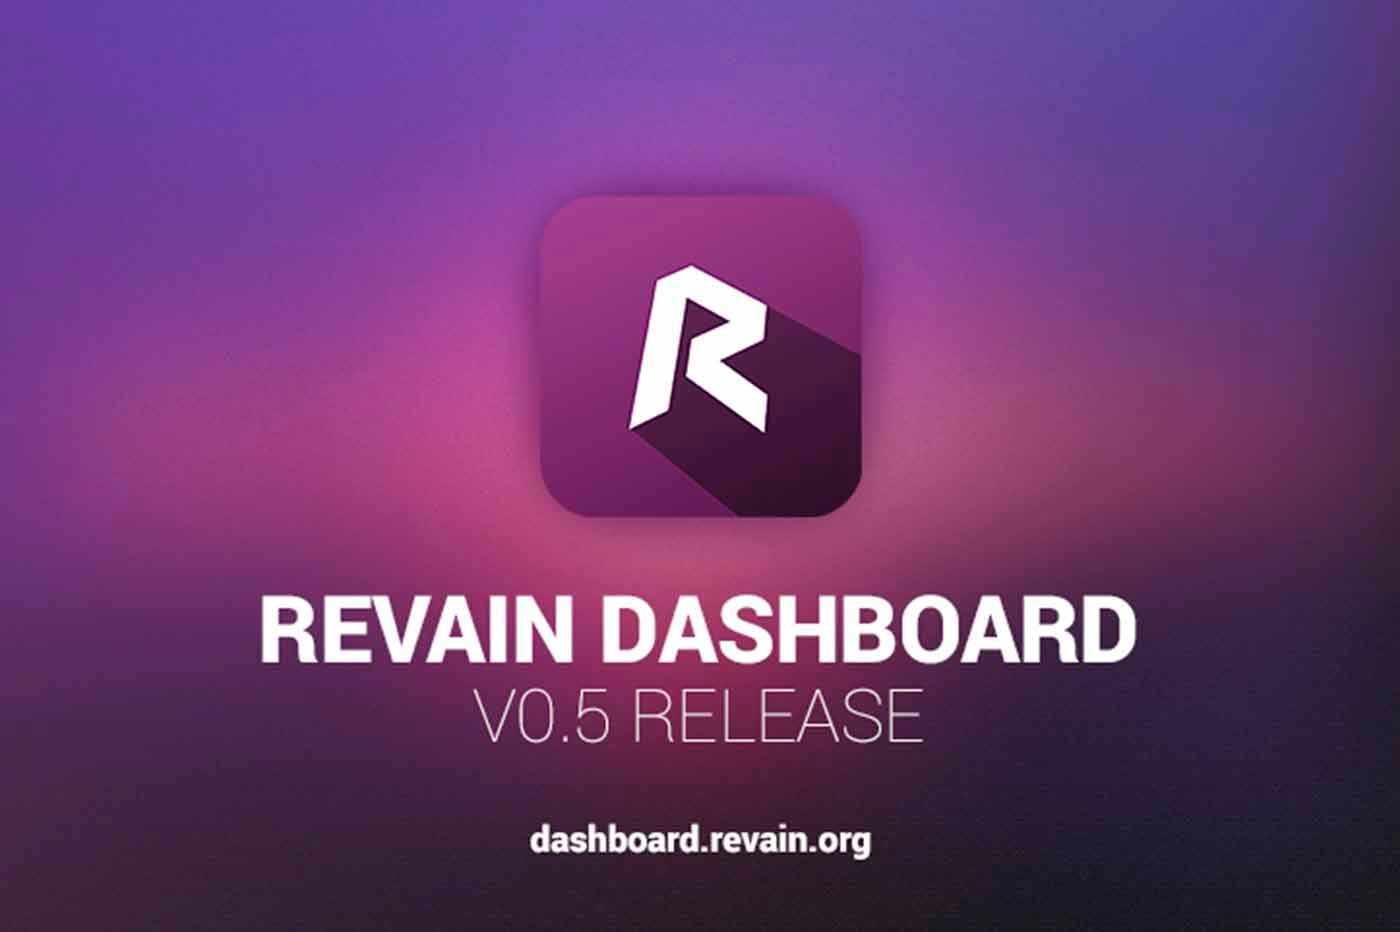 Article Revain releases version 0.5